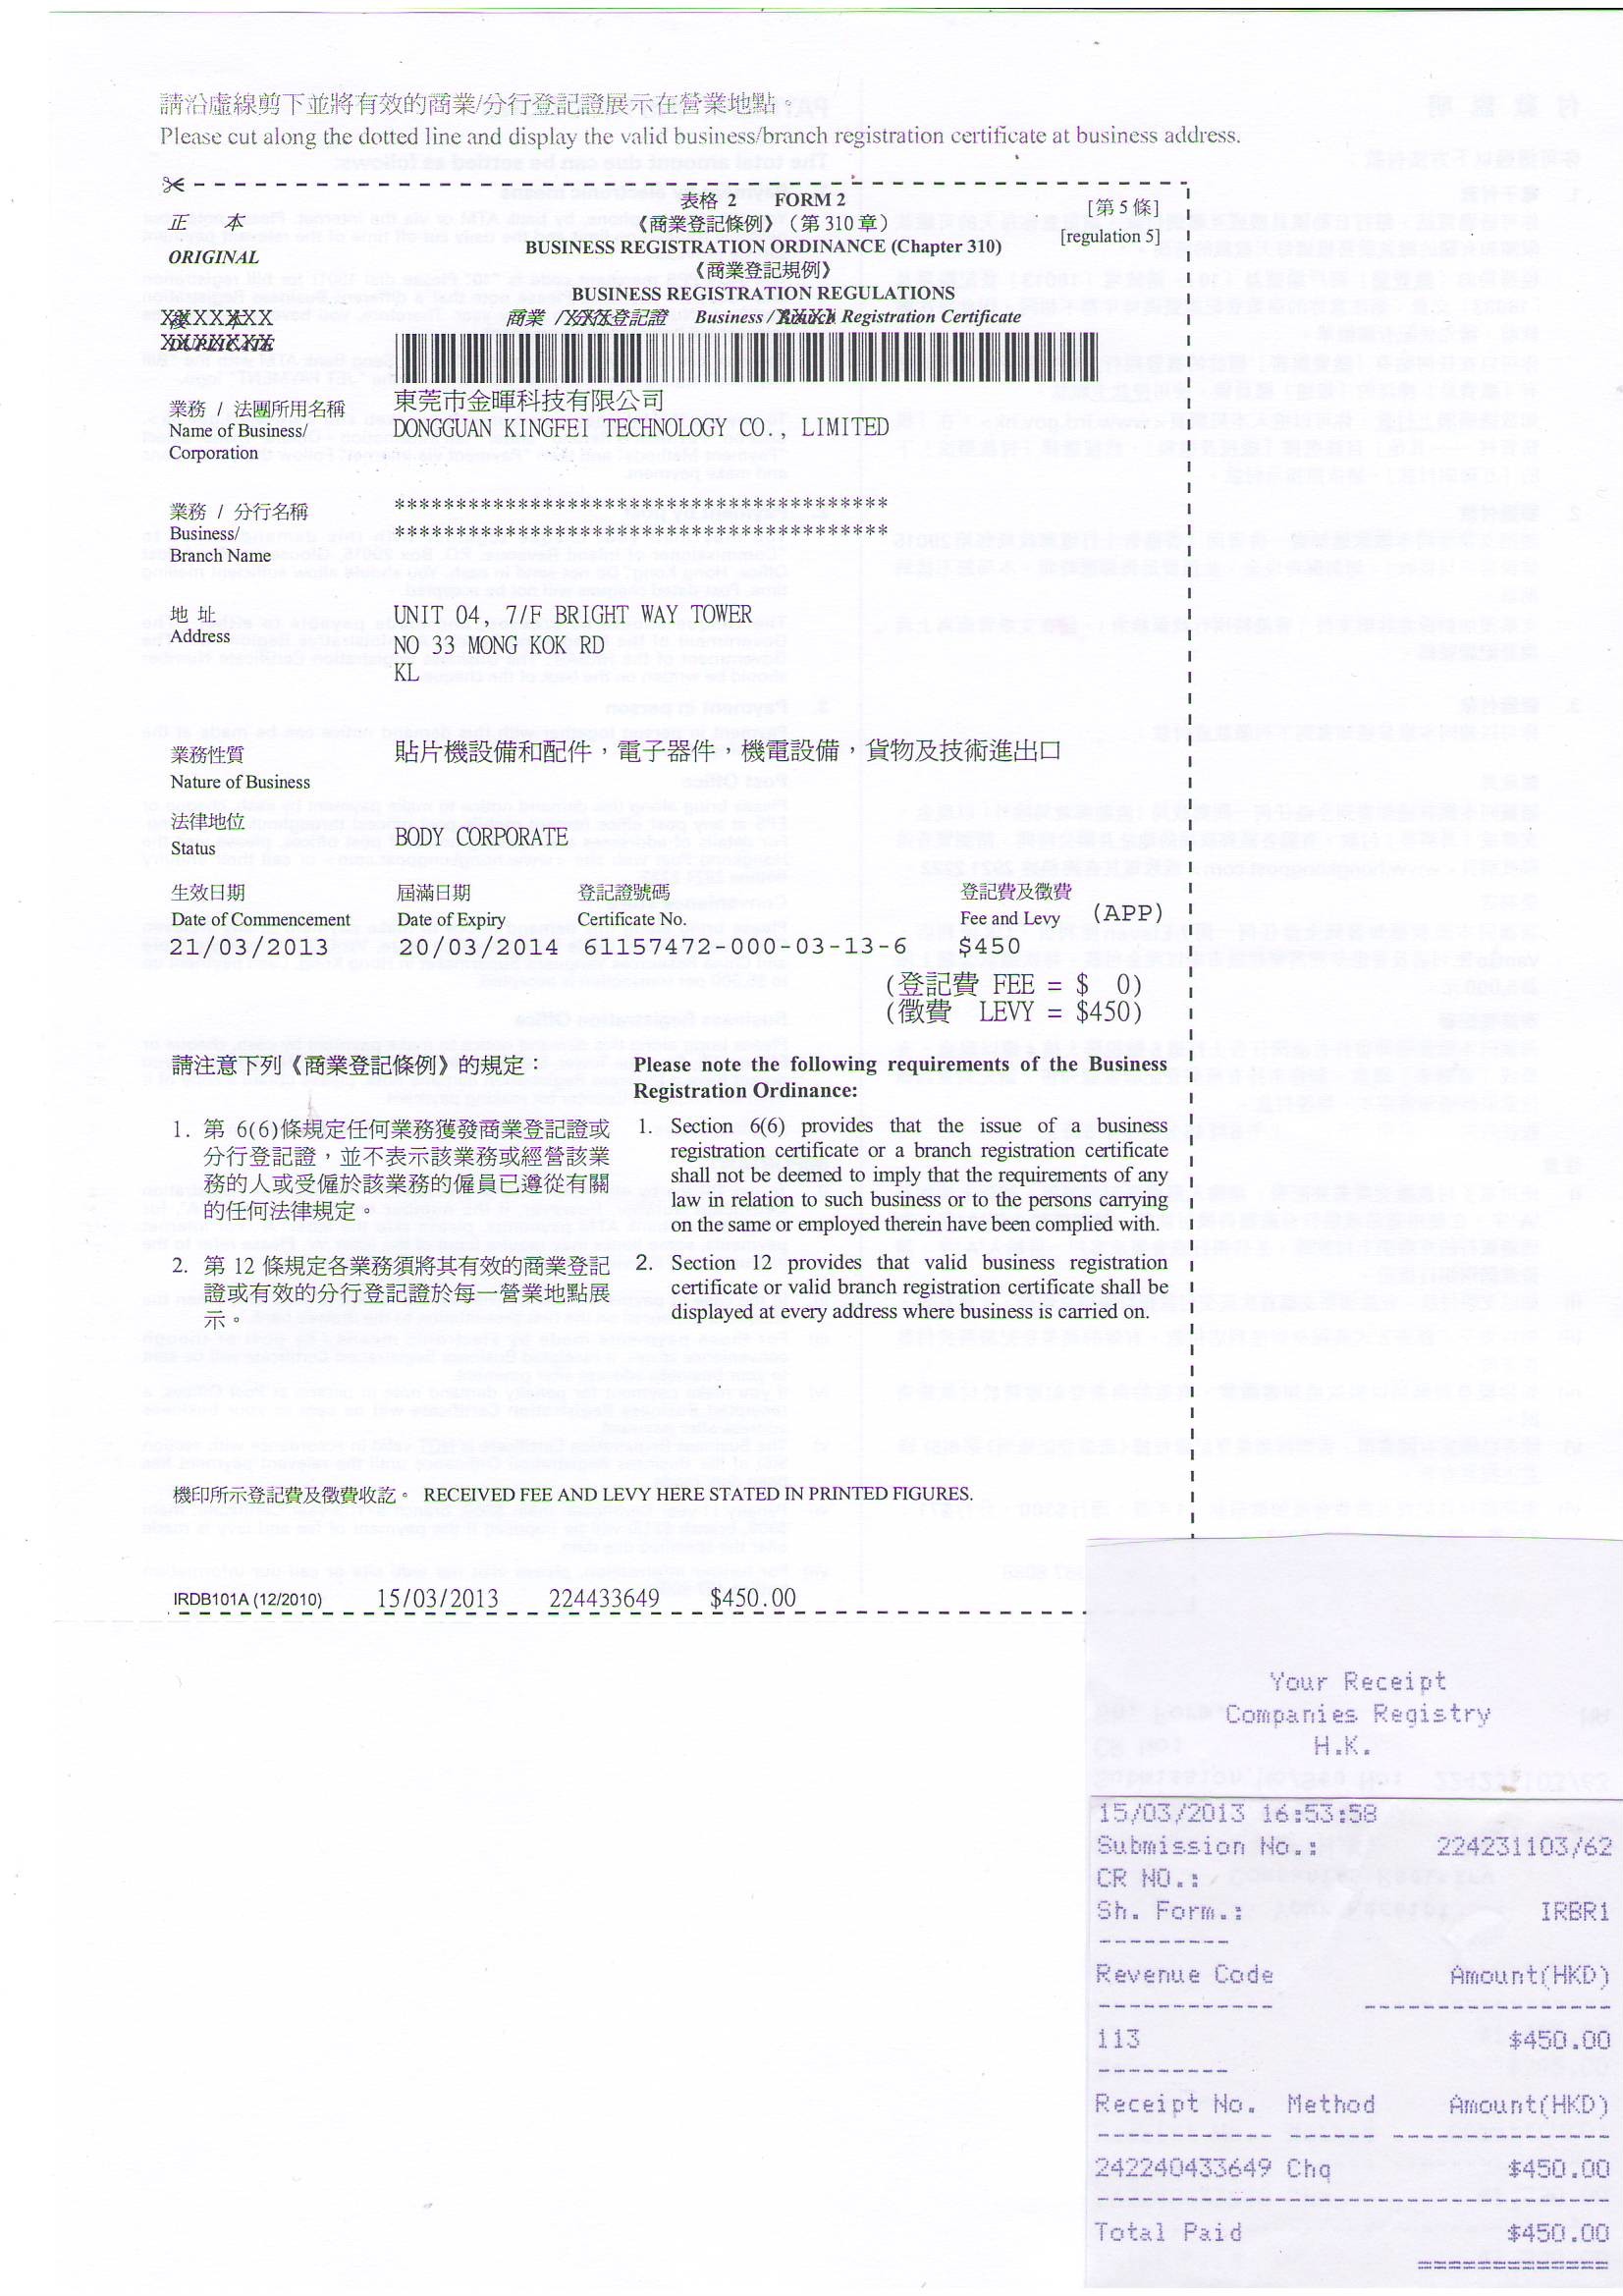 الصين Dongguan Kingfei Technology Co.,Limited الشهادات